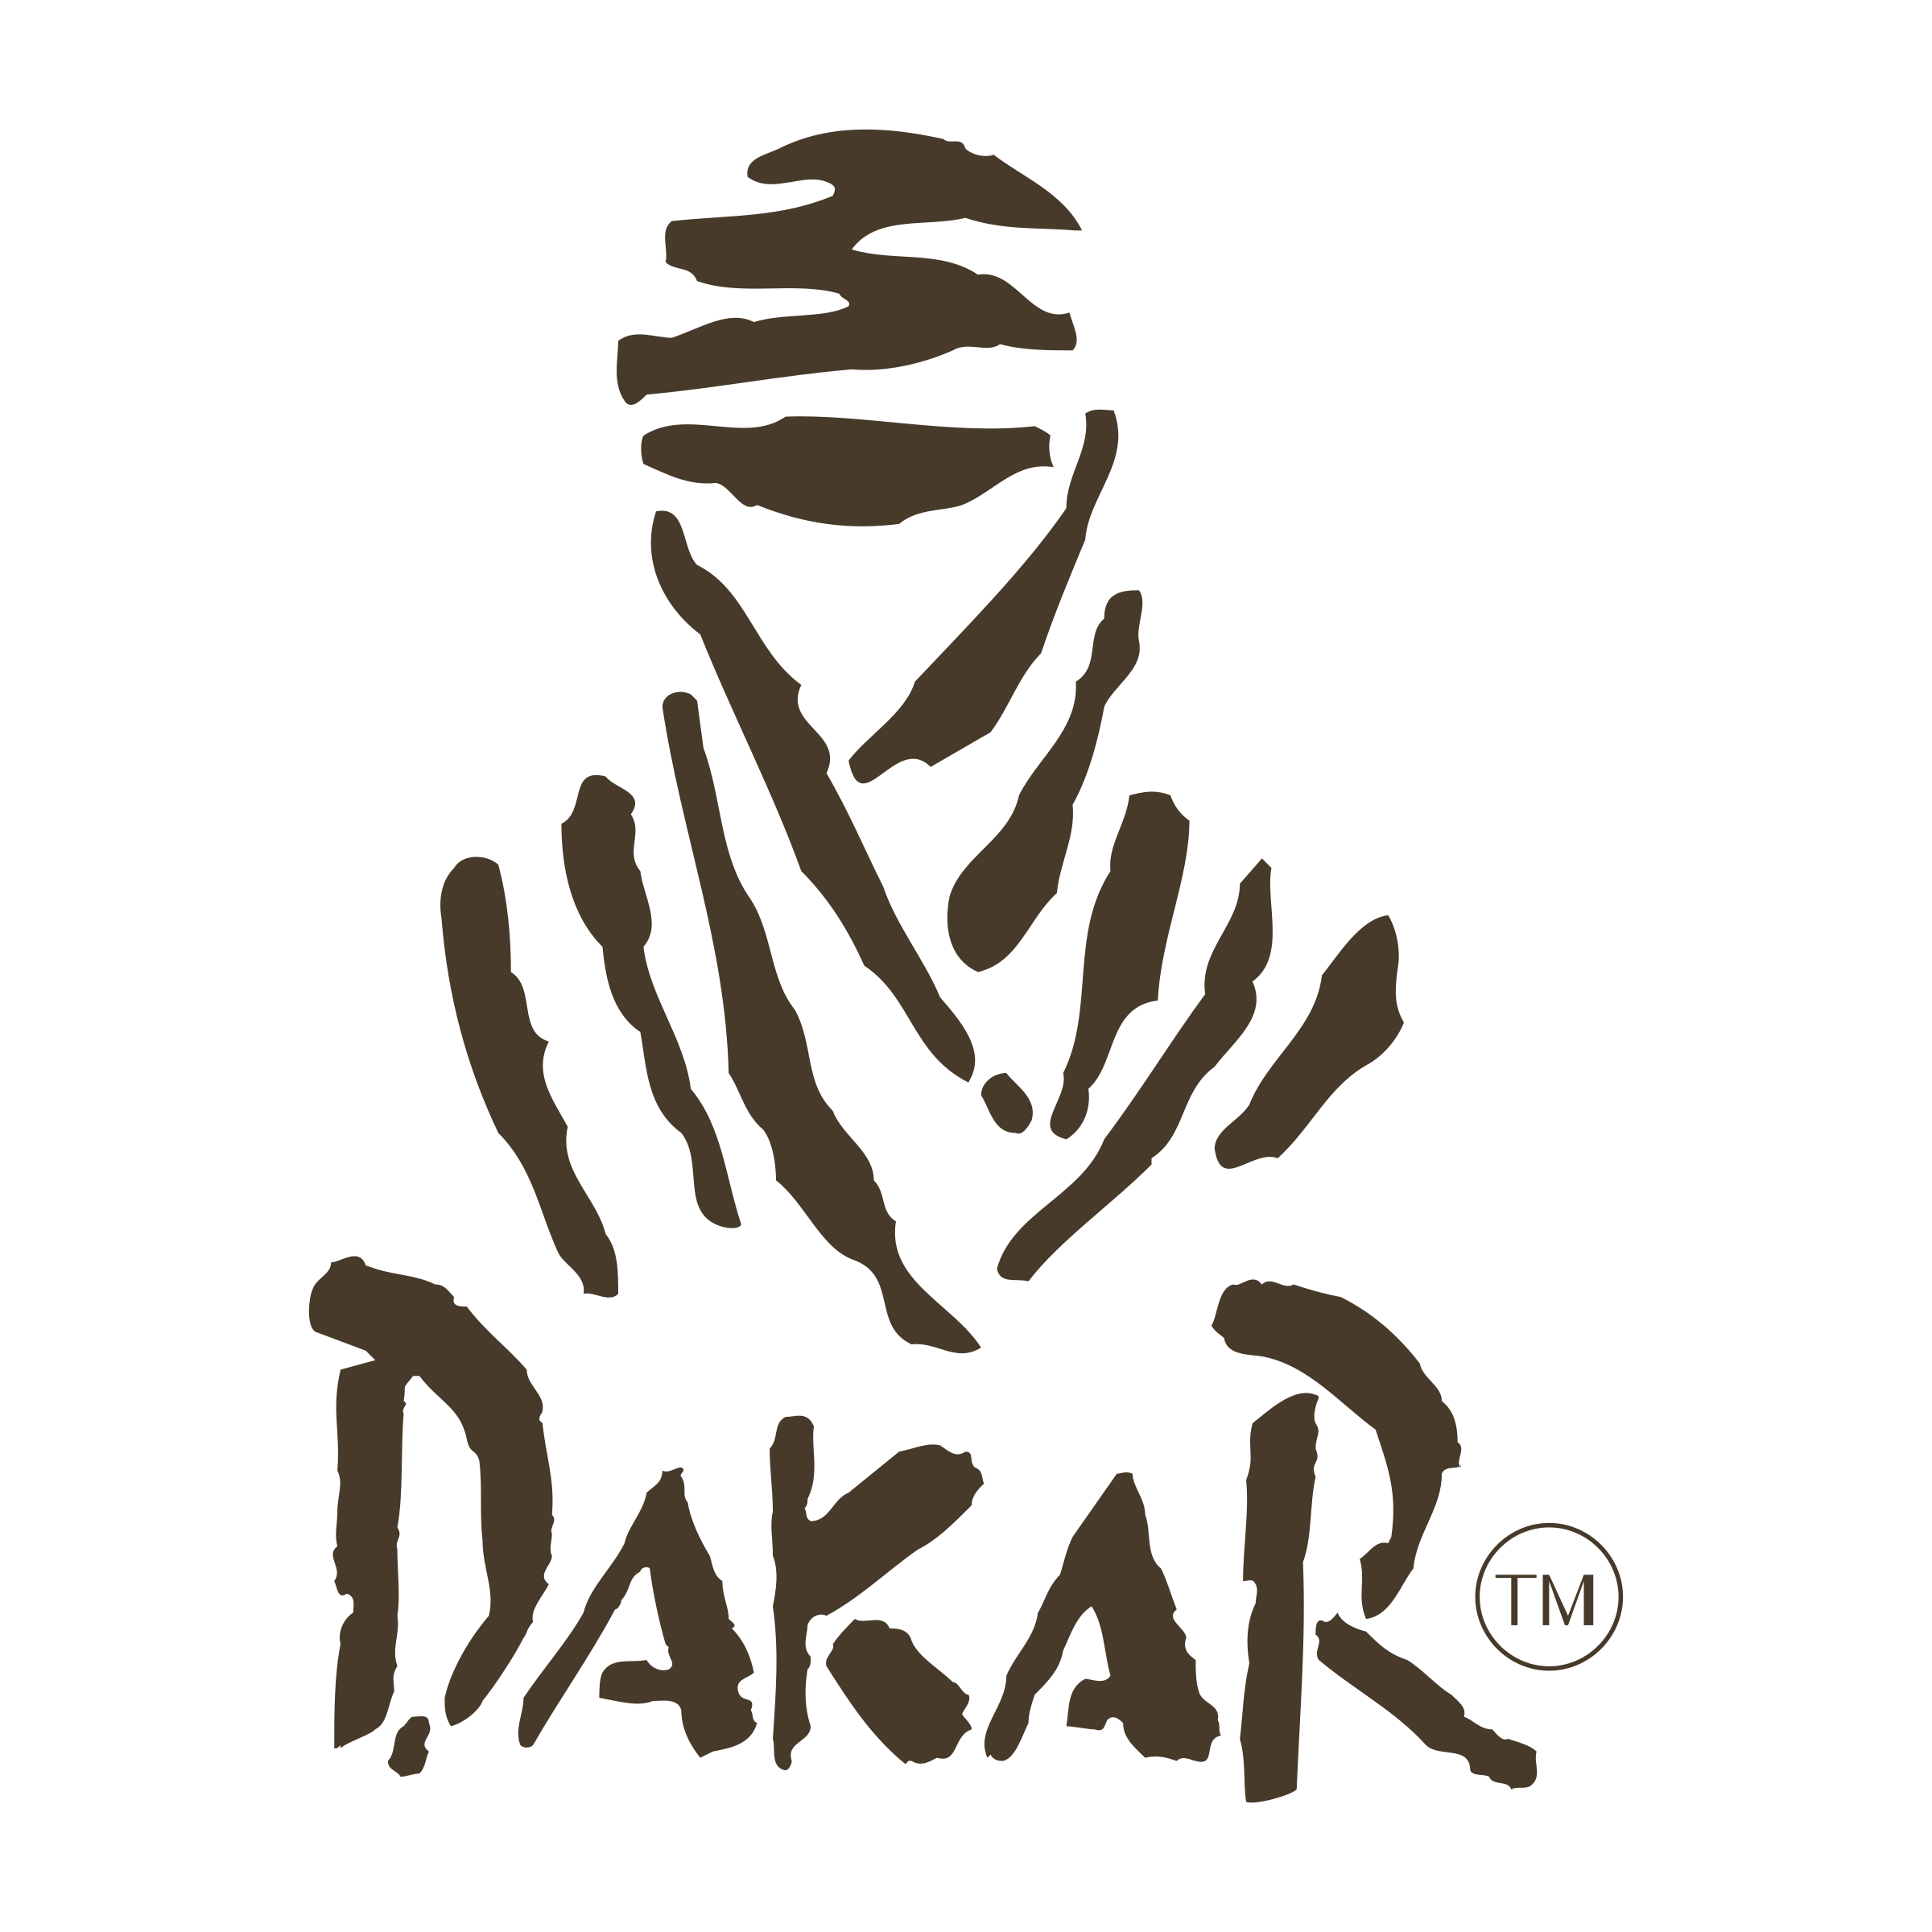 Dakar Rally Logo Png Transparent & Svg Vector - Pluspng Pluspng, Dakar Rally Logo PNG - Free PNG